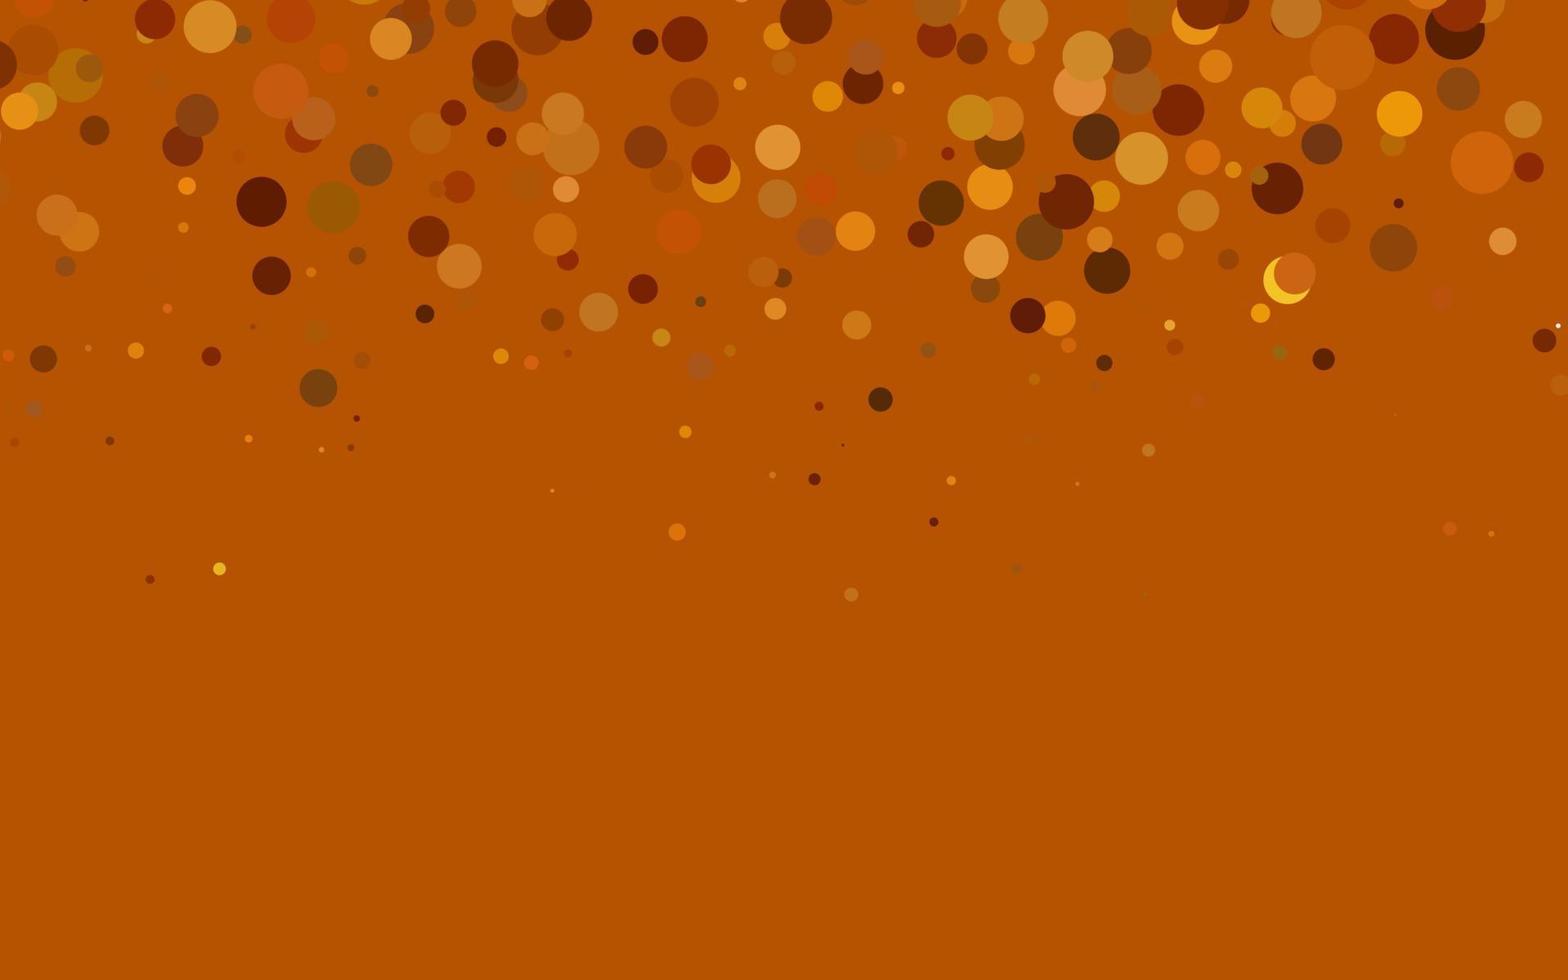 diseño vectorial naranja claro con puntos circulares. vector